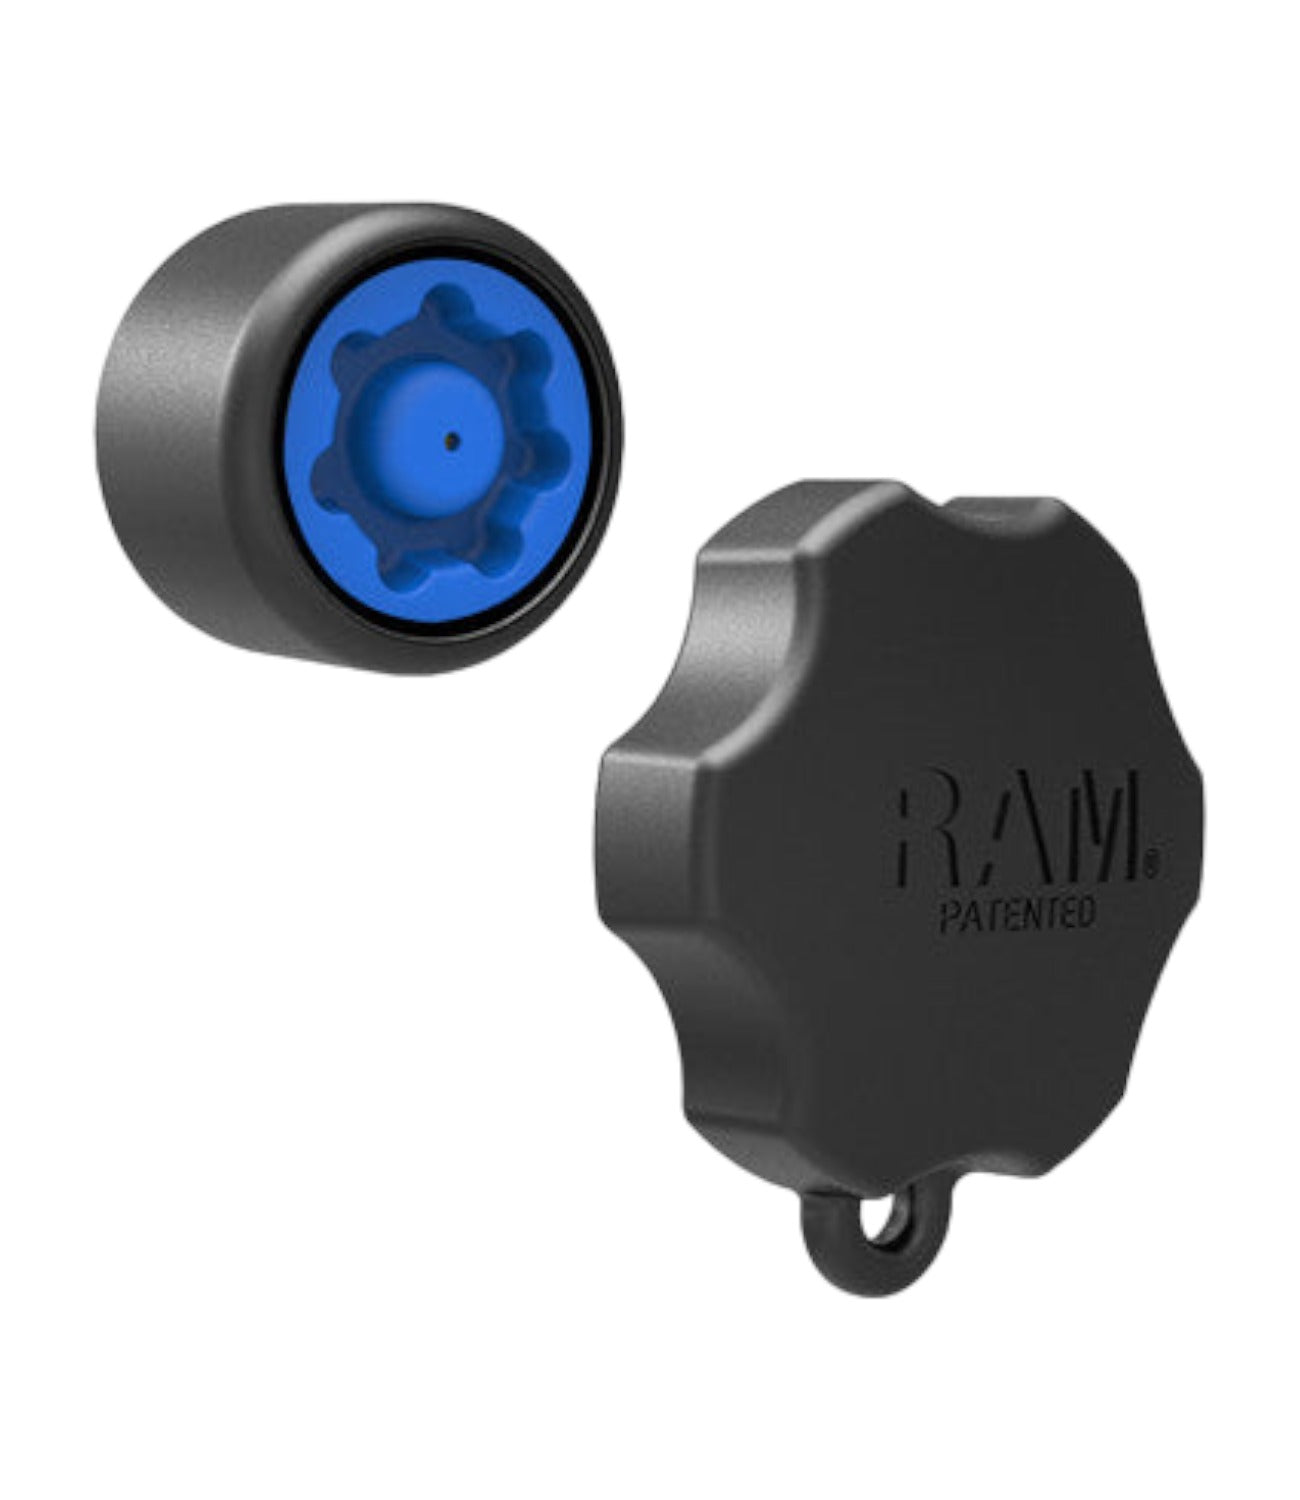 Ram Security - Knob Lock